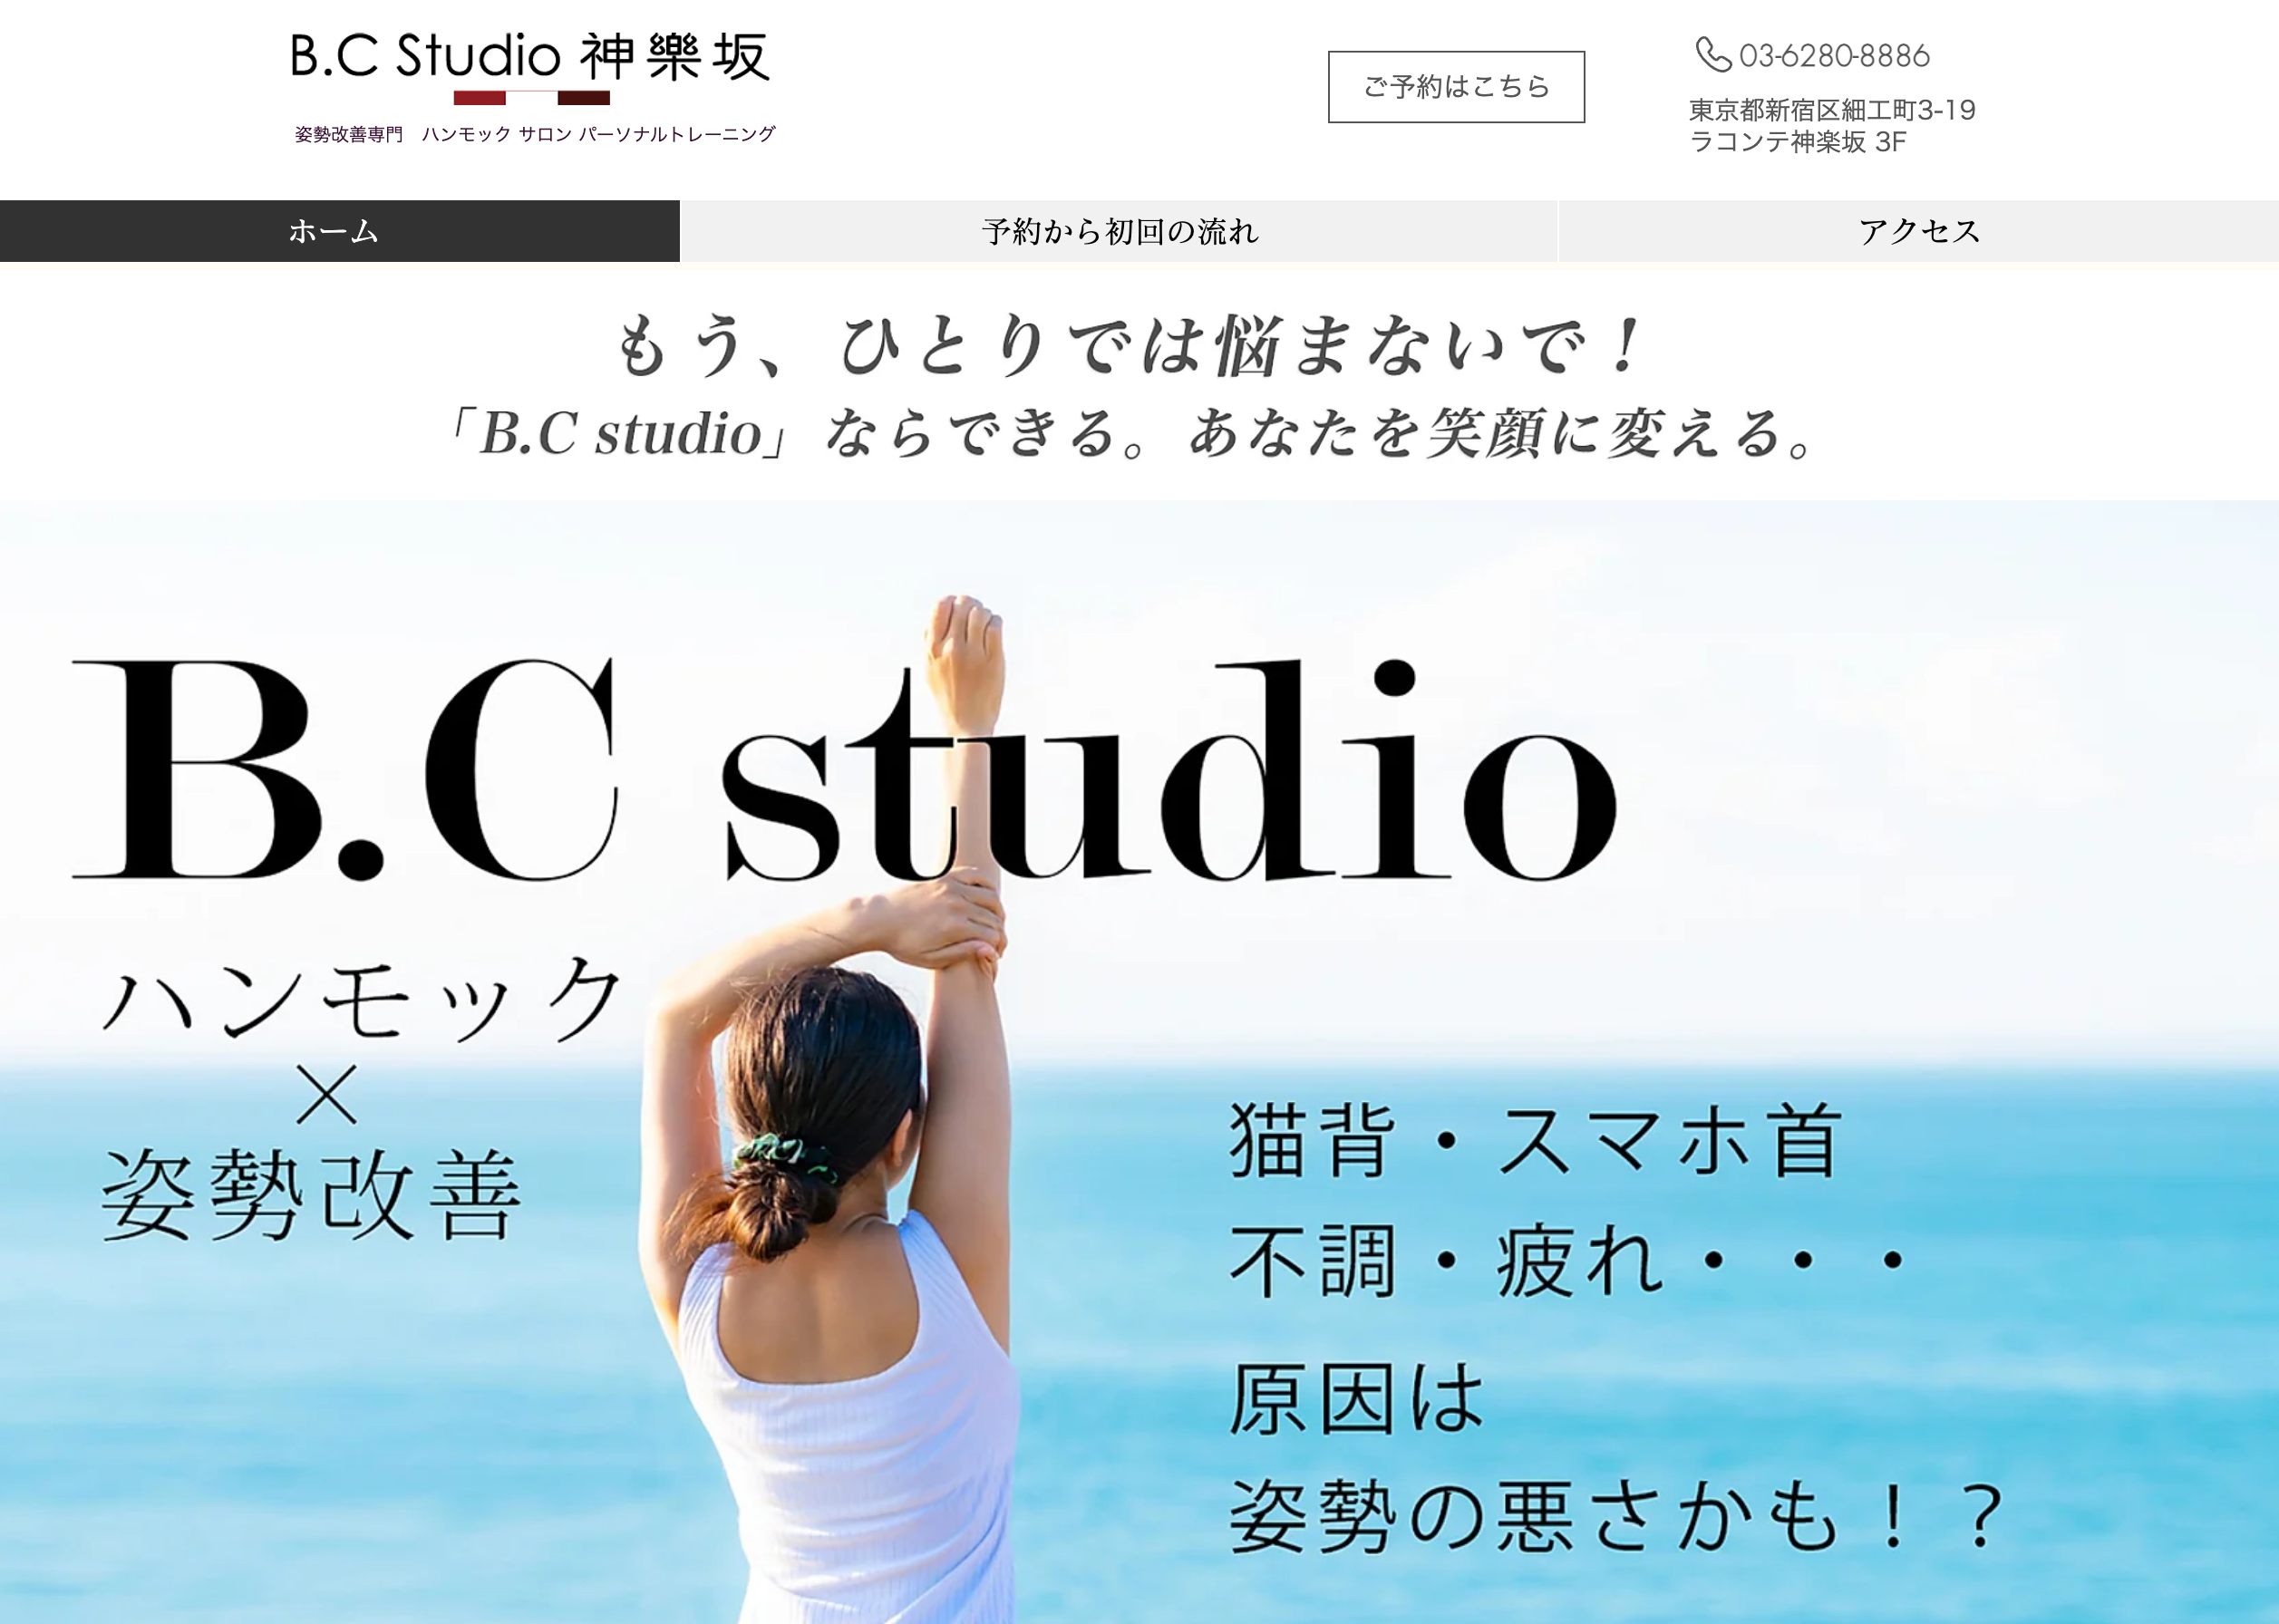 B.C Studio